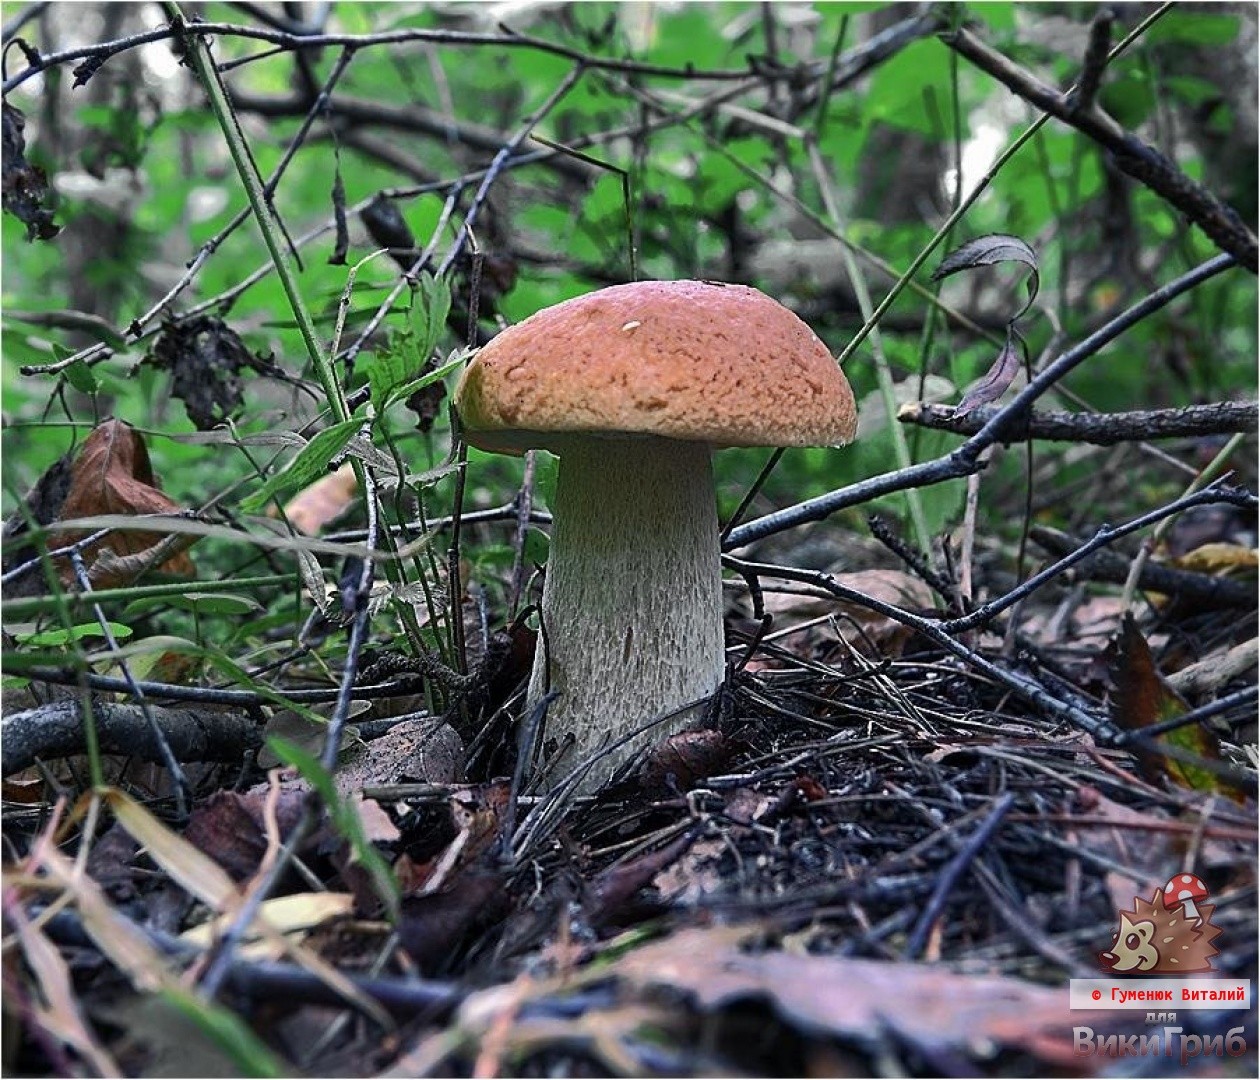 mushroom hunting